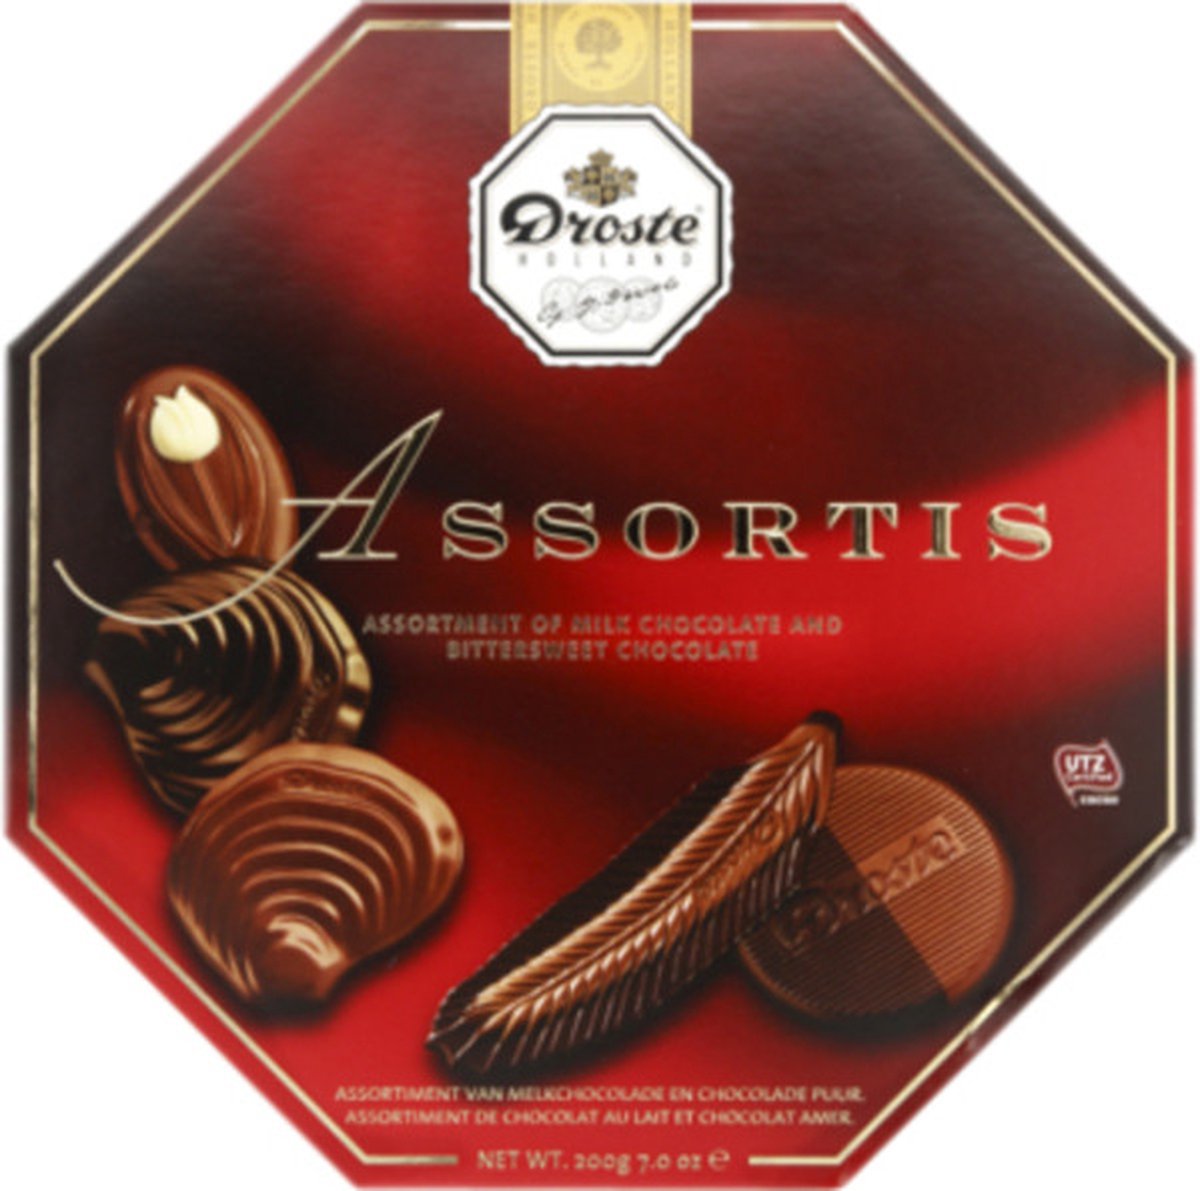 Chocolade droste verwenbox assorti 200 gr | Doos a 200 gram | 6 stuks